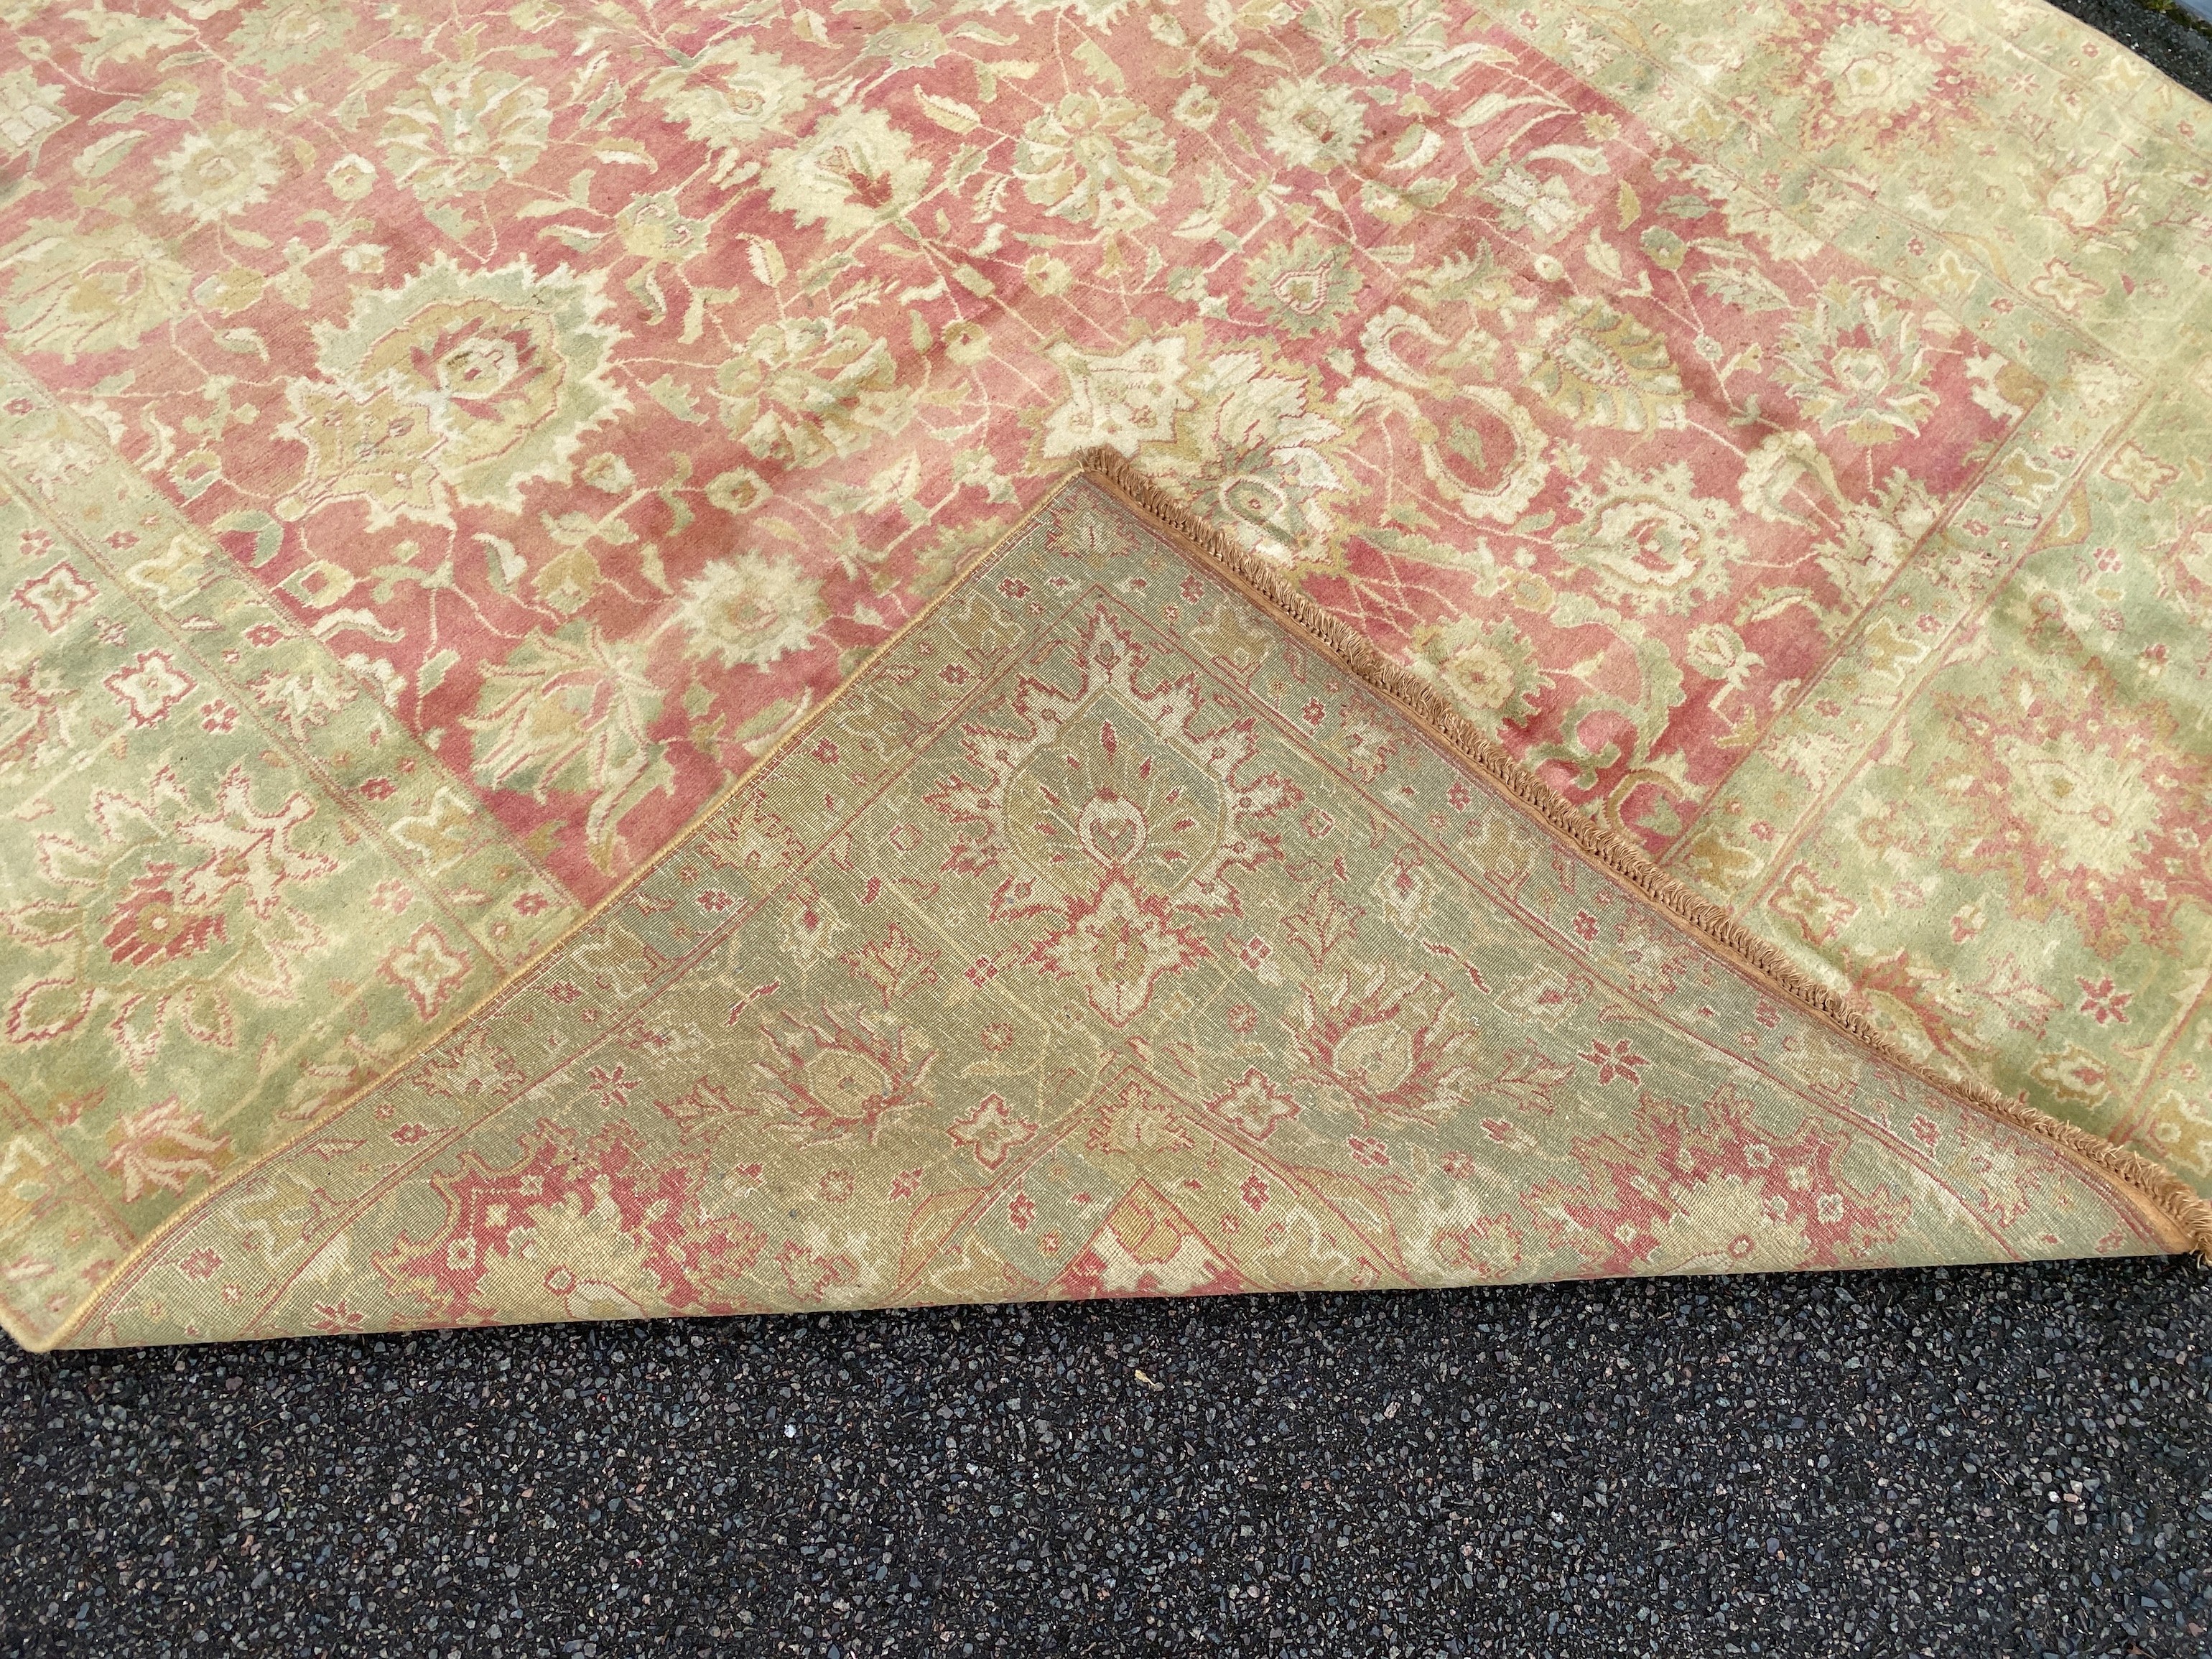 An Indian Agra carpet, 358 x 261cm